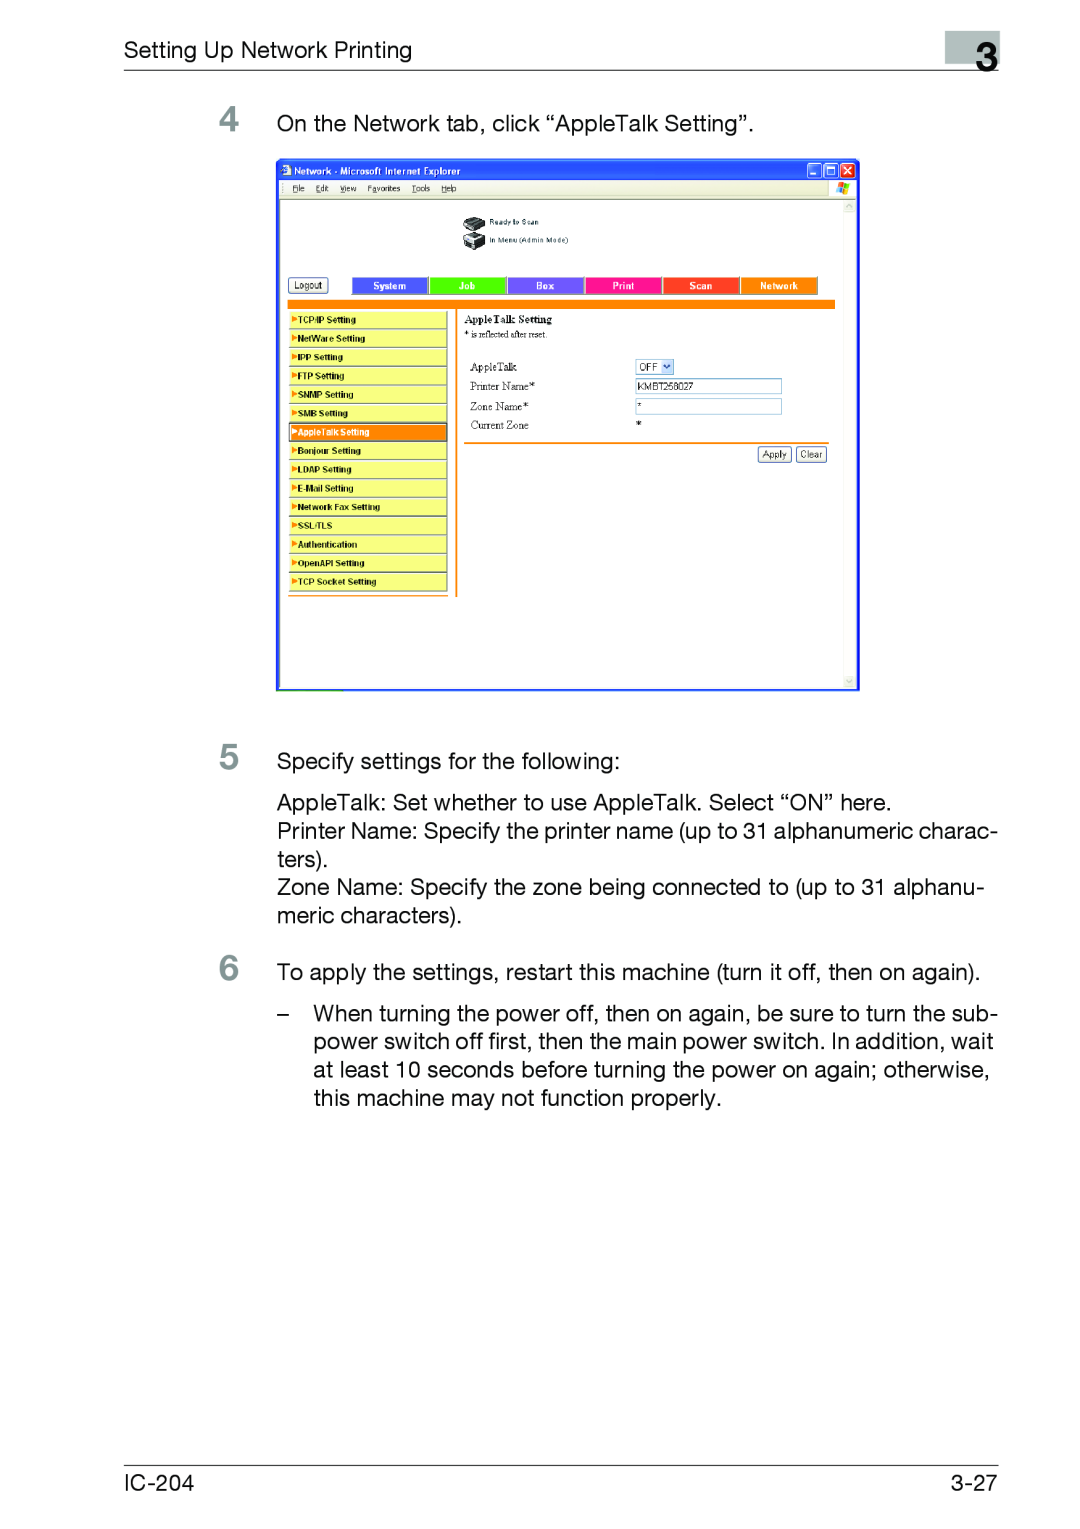 Konica Minolta IC-204 manual 4 5 6, Setting Up Network Printing 